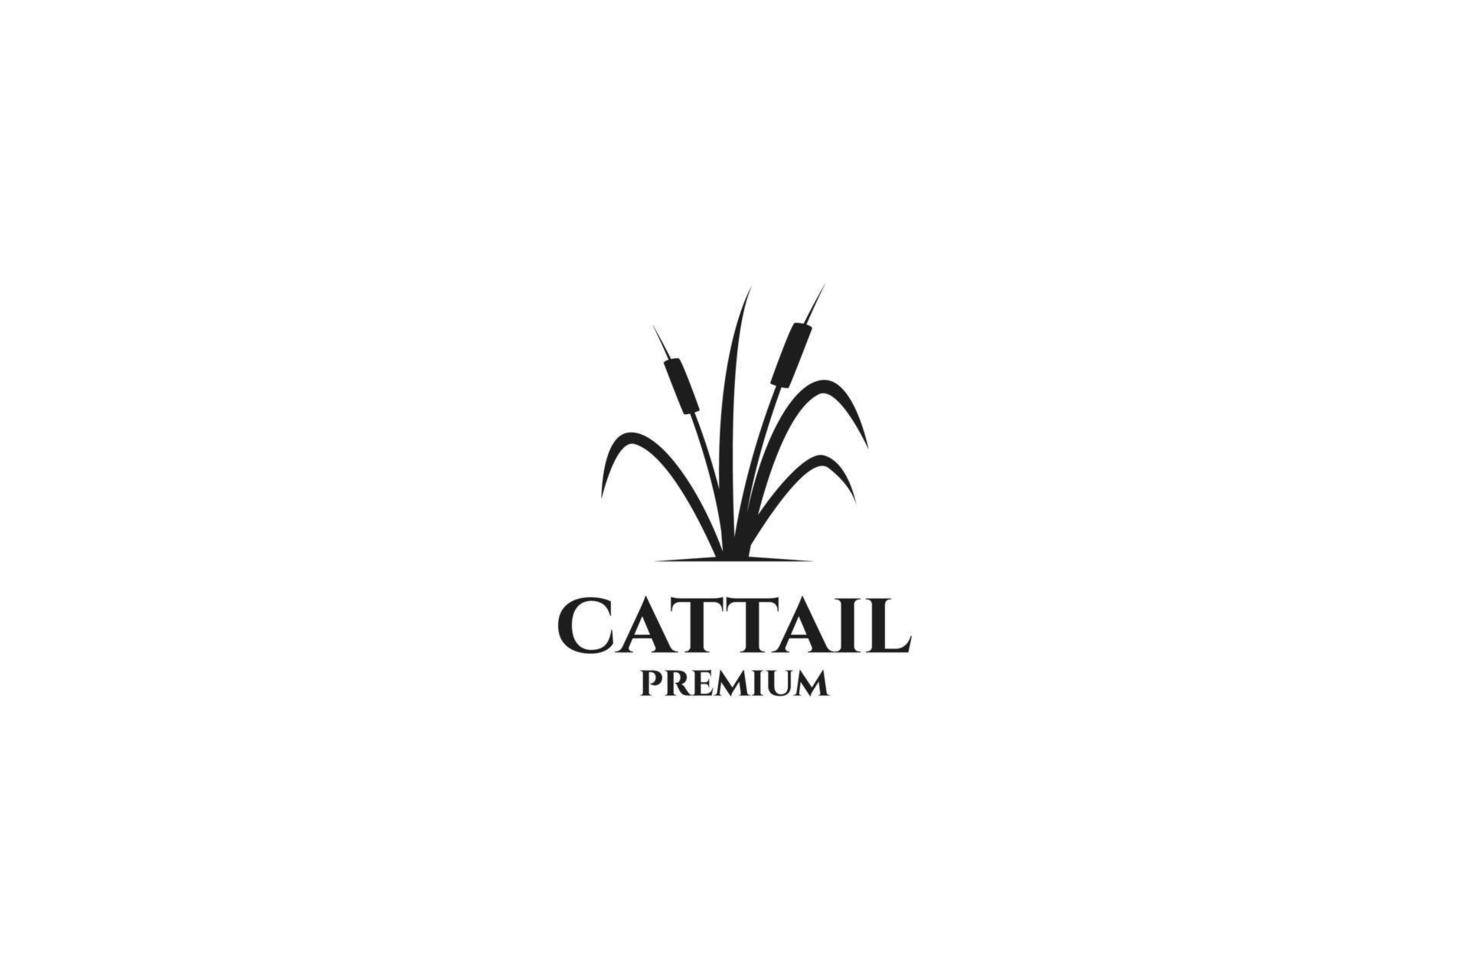 vlak cattail gras logo ontwerp vector illustratie idee